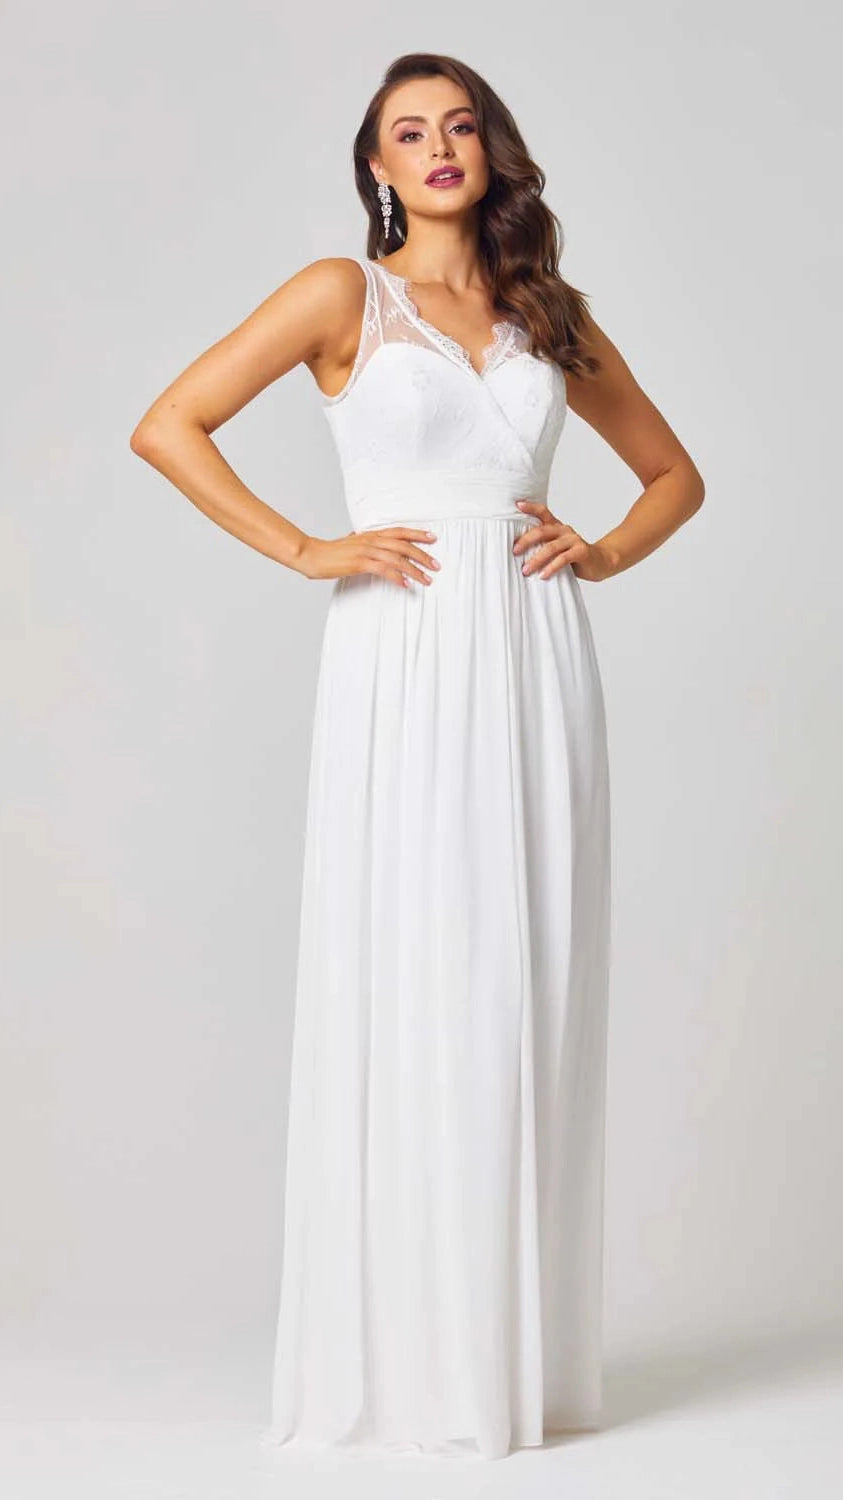 Tania Olsen TO811 Taliyah Bridesmaid Dress